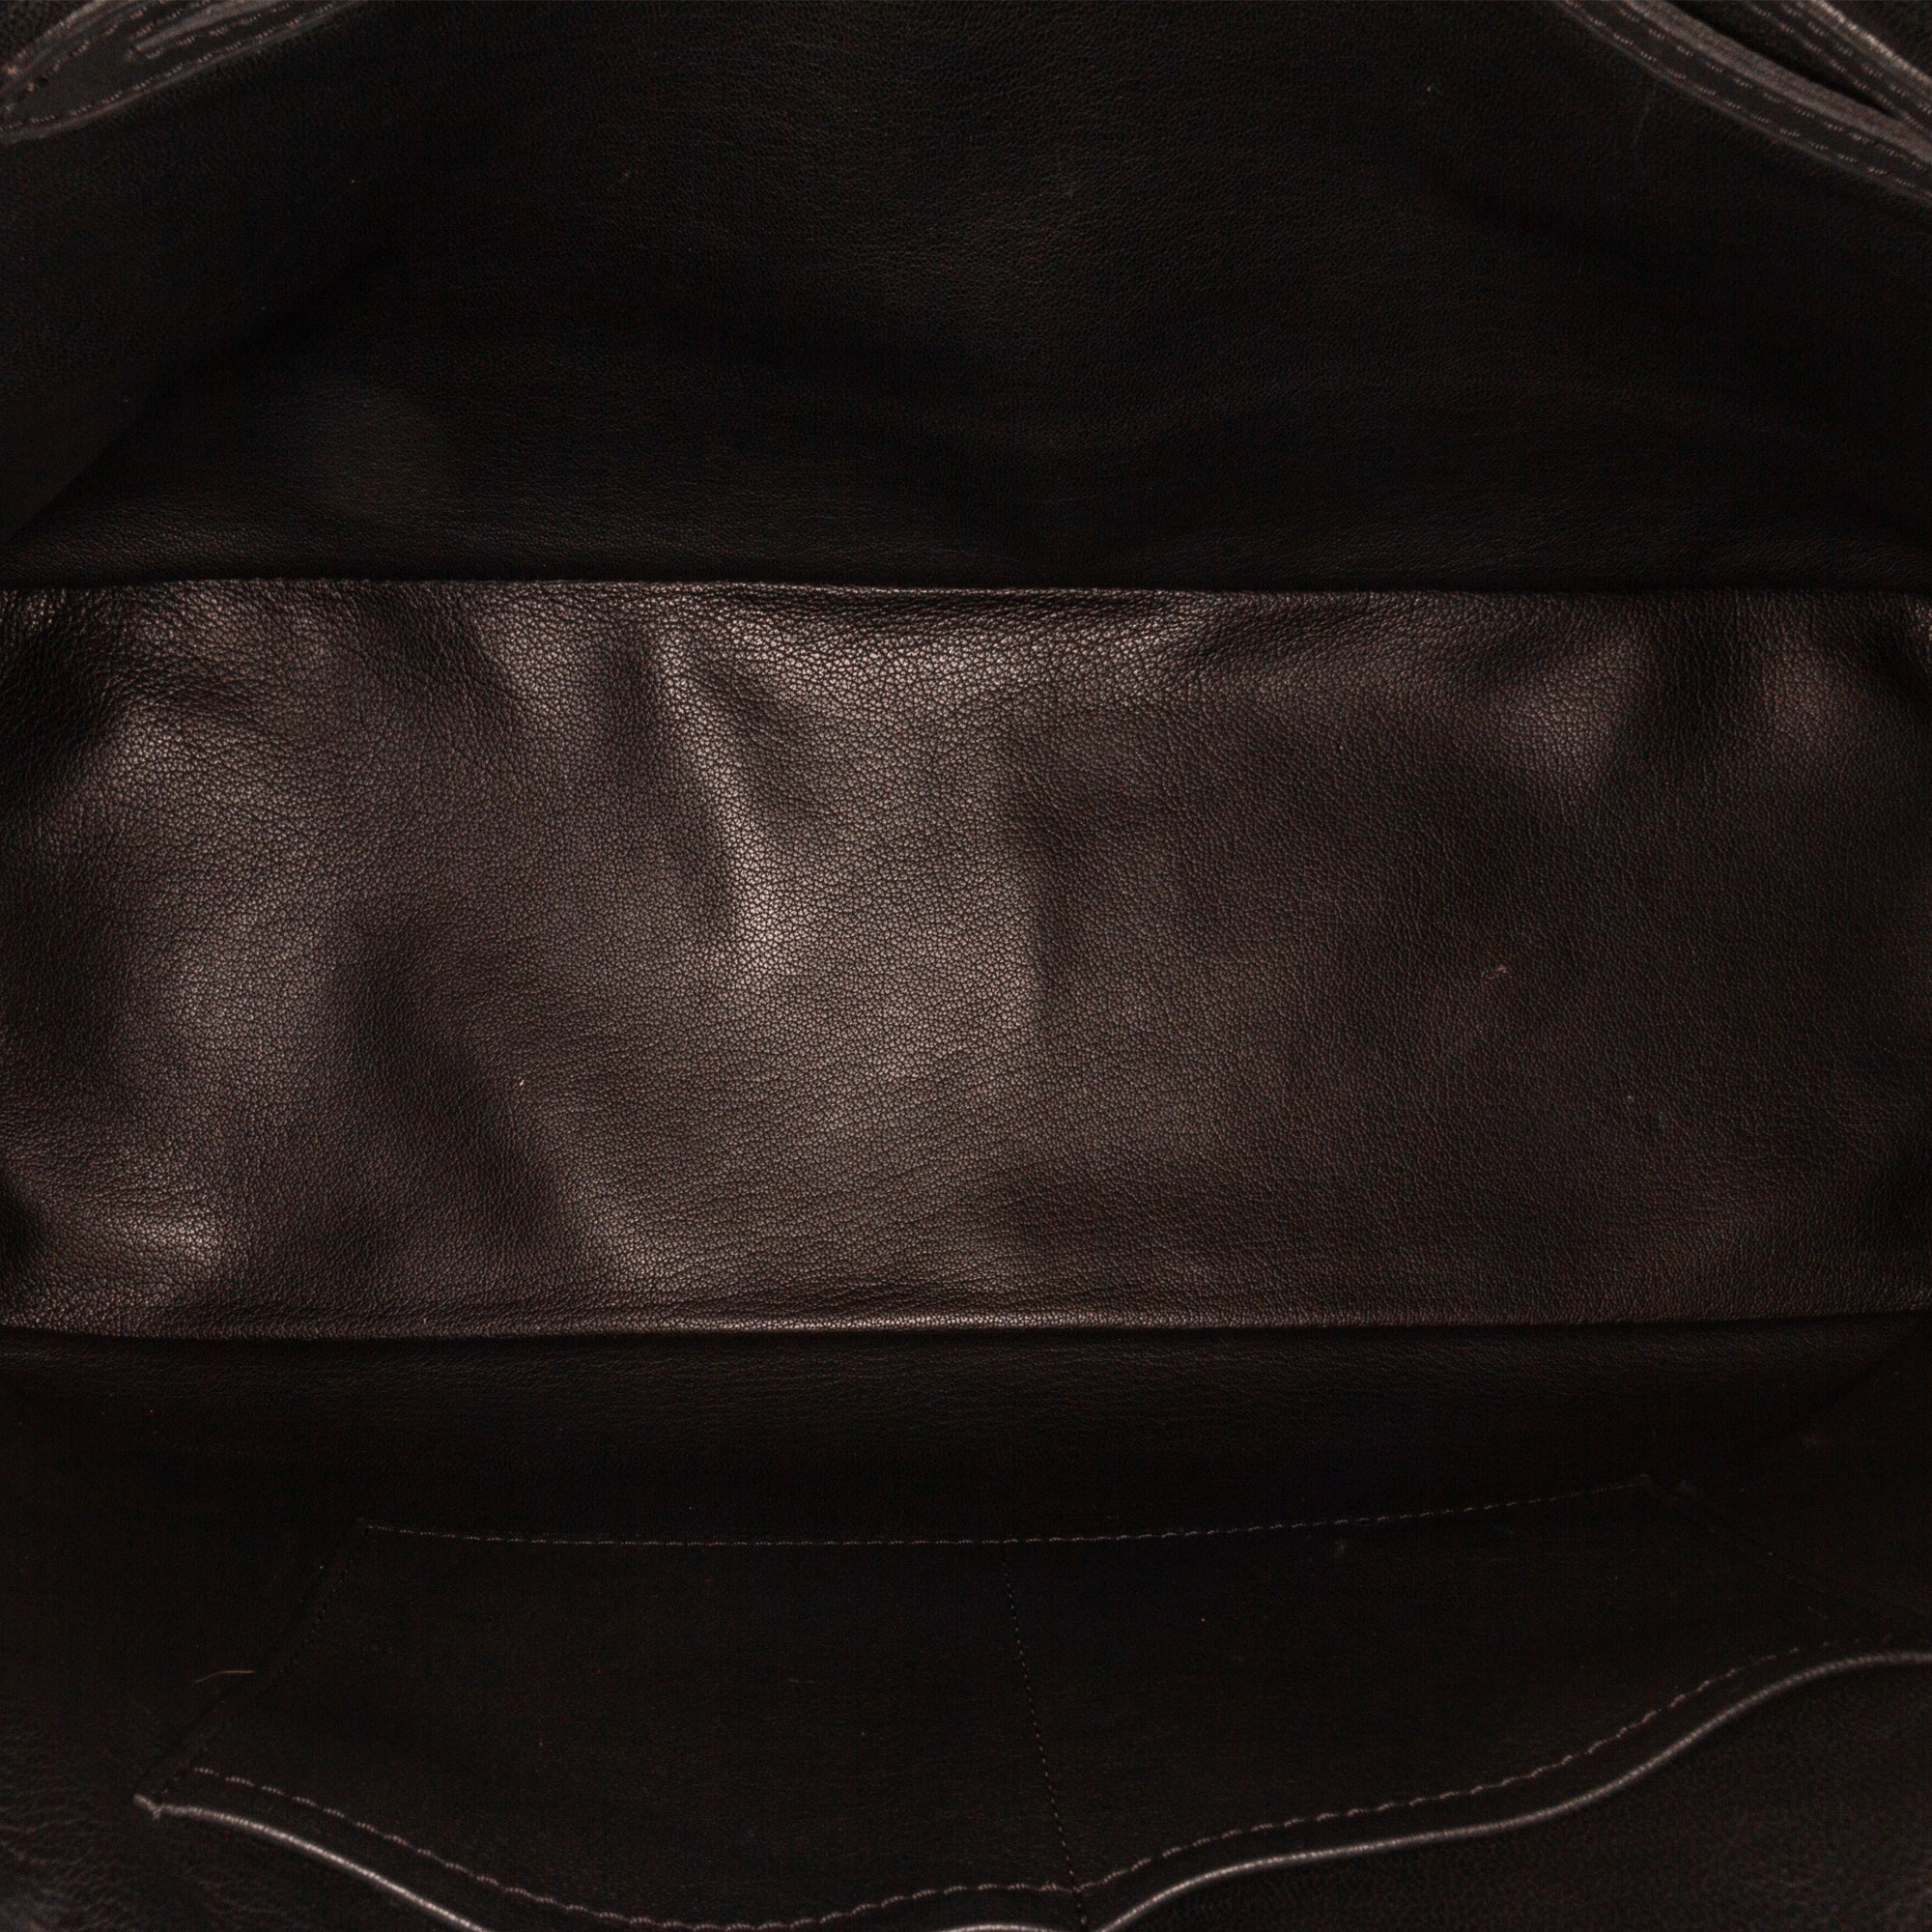 BLACK SHOULDER BAG WITH GOLD CHAIN – Le Obsession Boutique